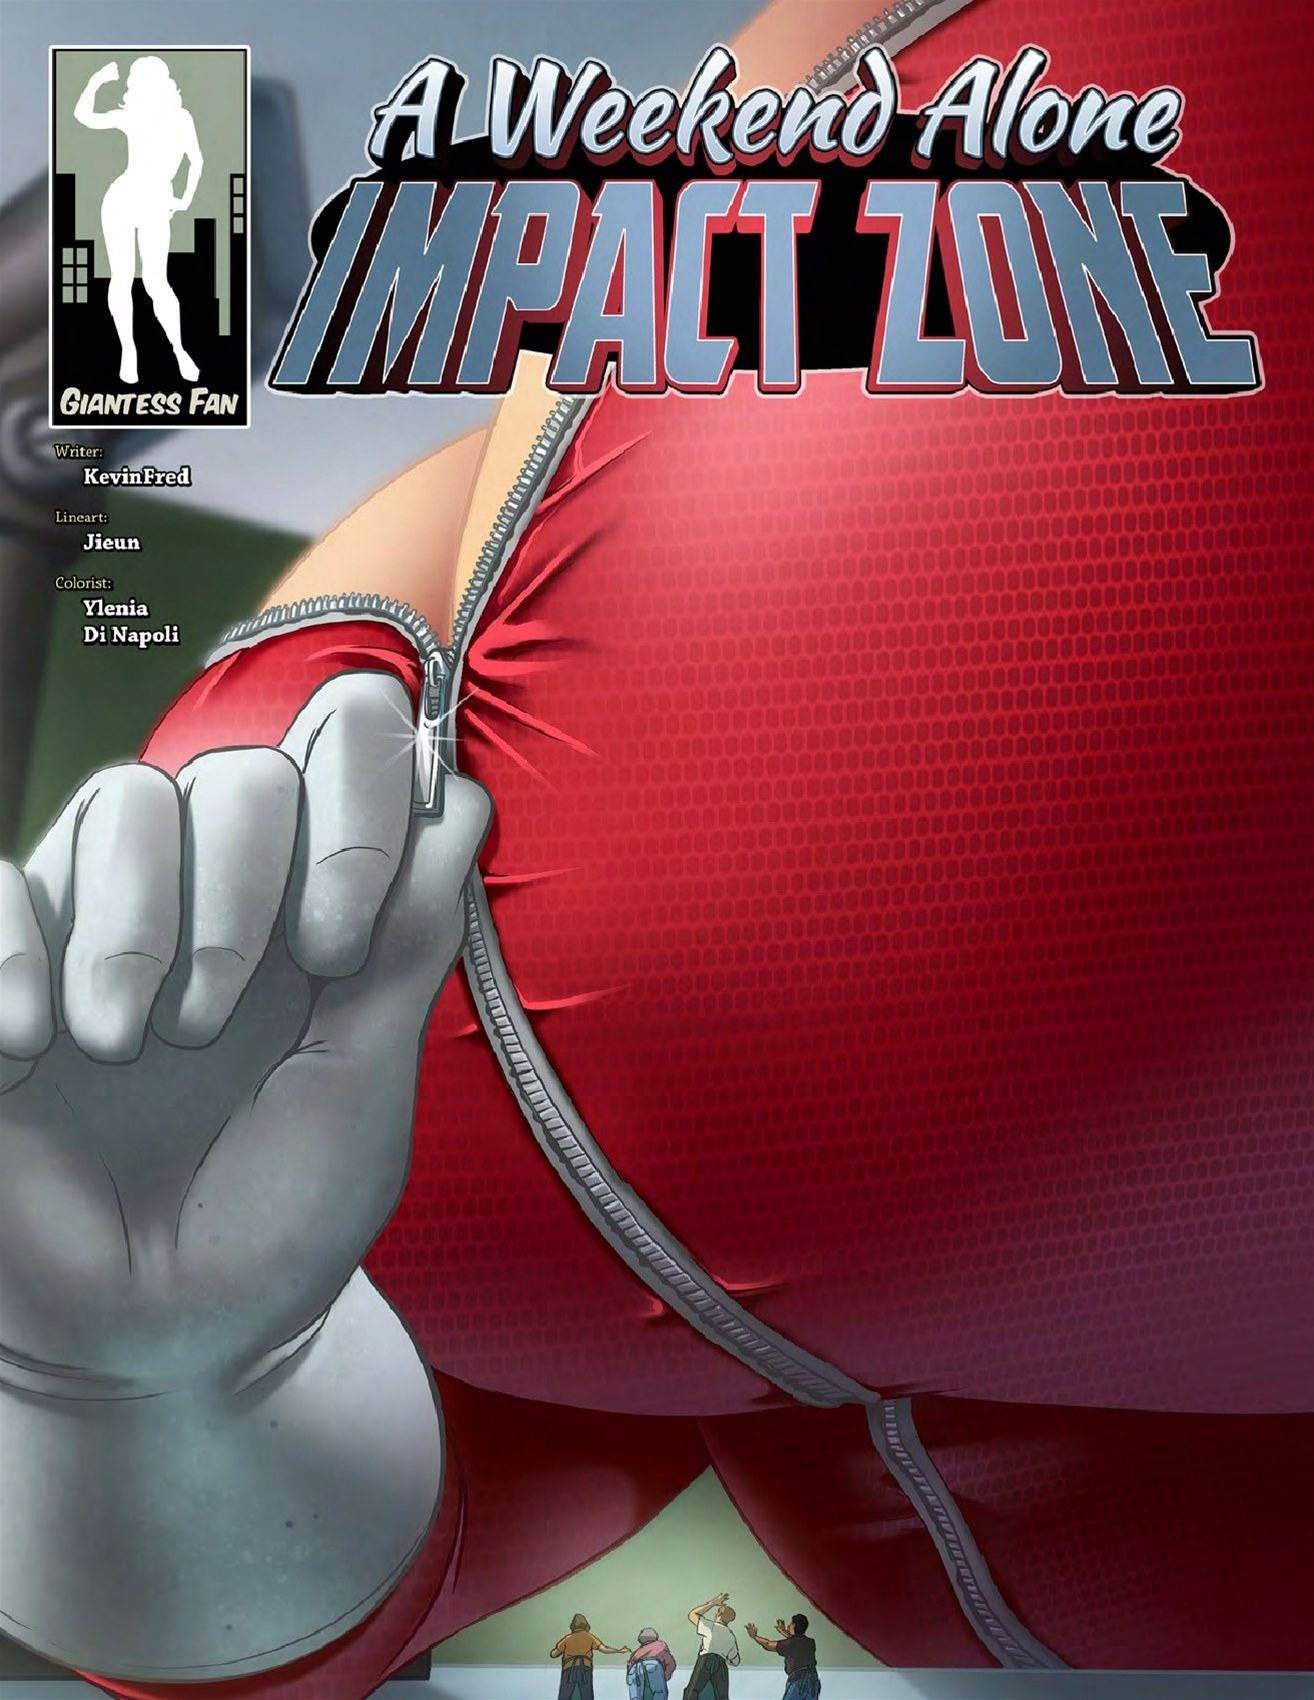 A Weekend Alone - Impact Zone - Giantess Fan. 